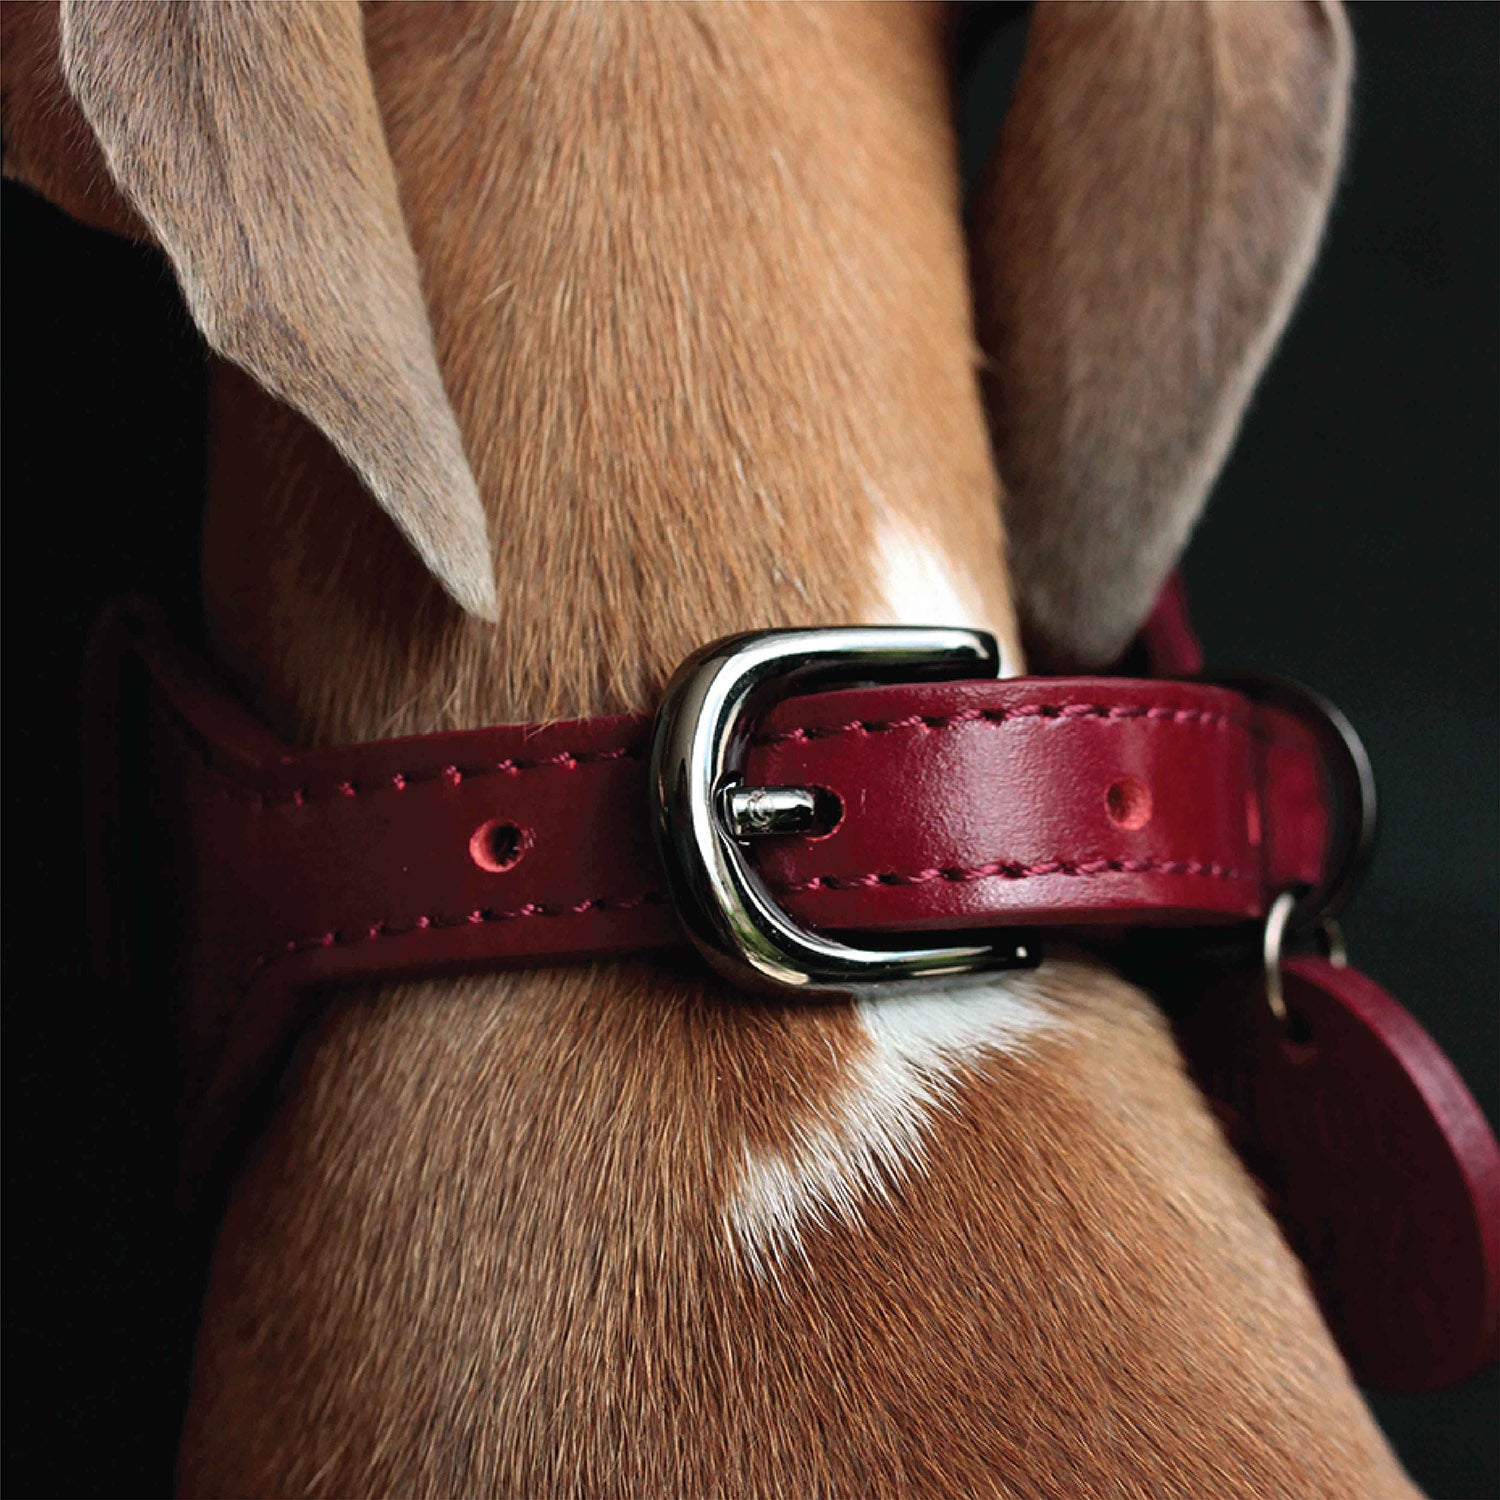 Hermes Hound Leather Dog Collars